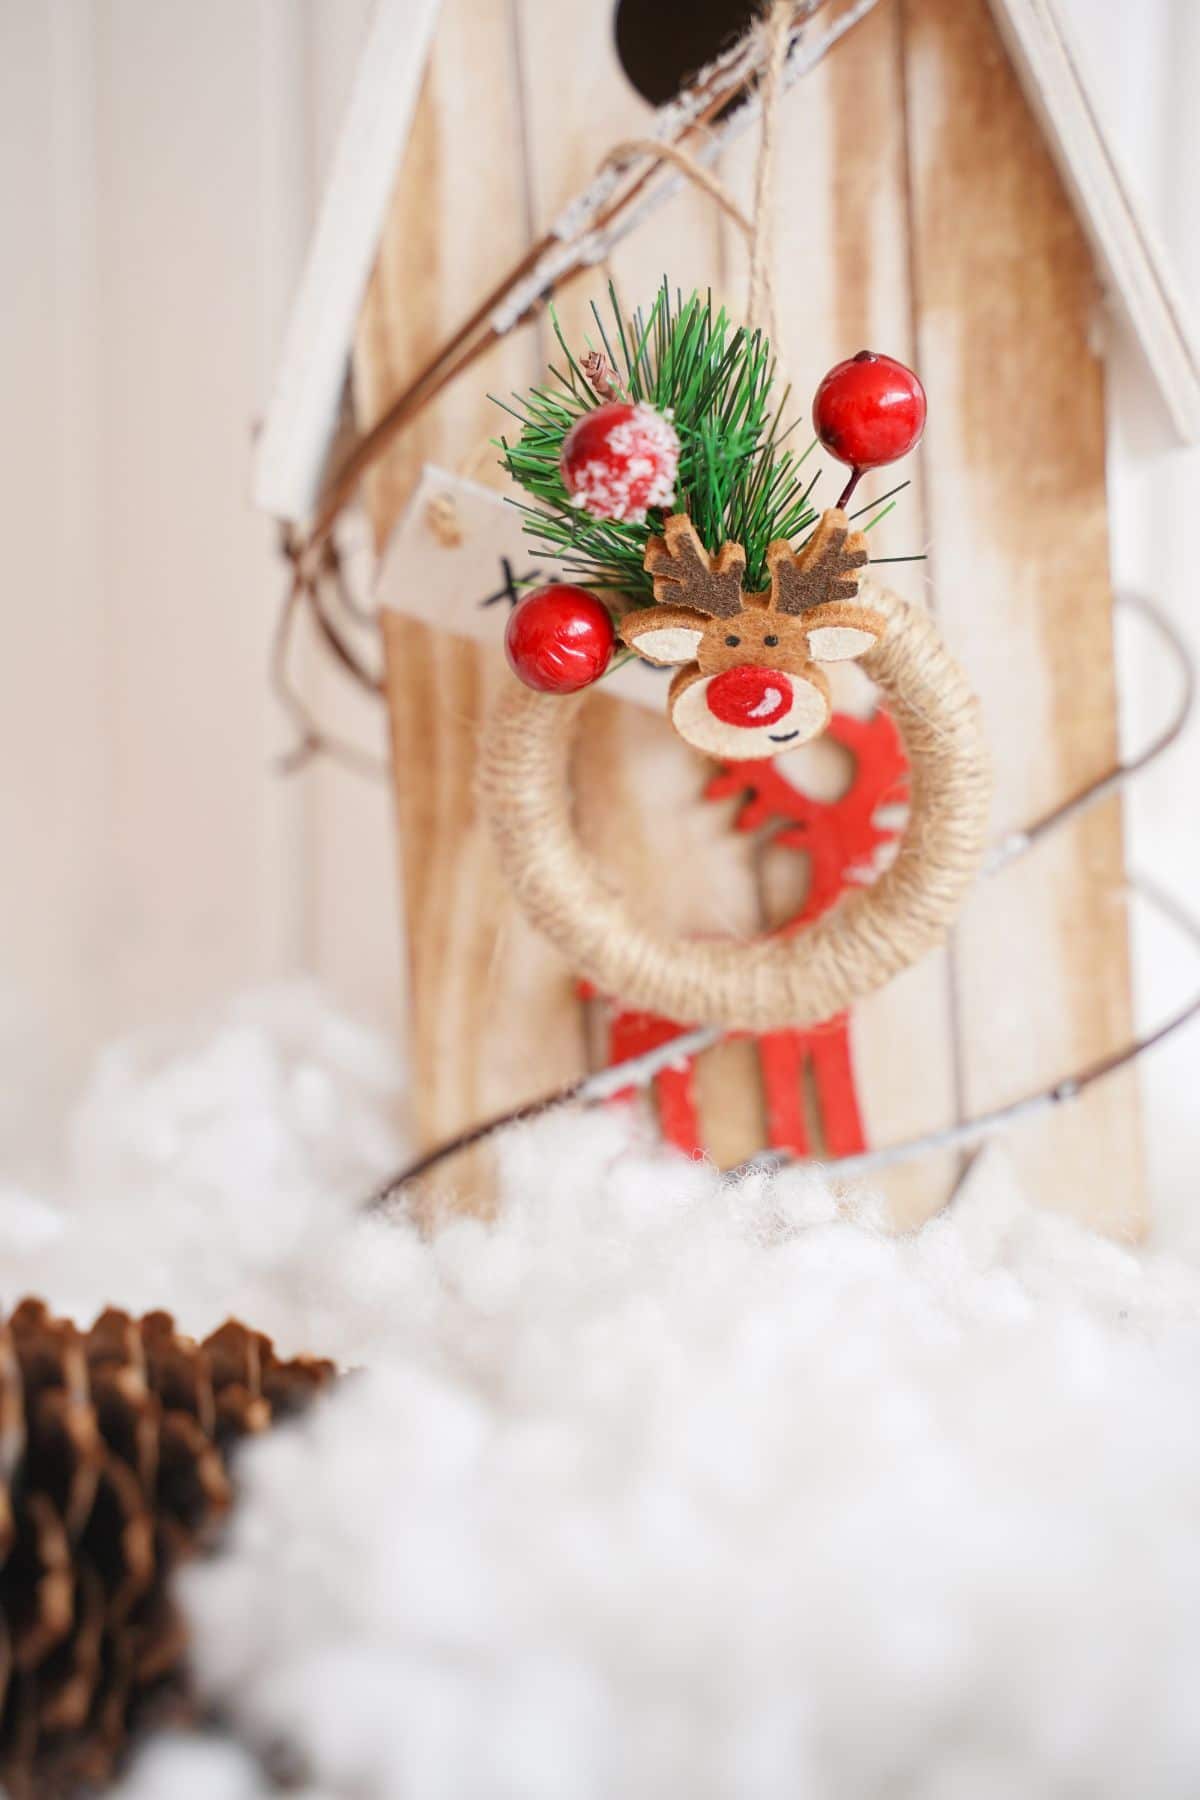 mini rustic wreath in wooden birdhouse sitting on fake snow